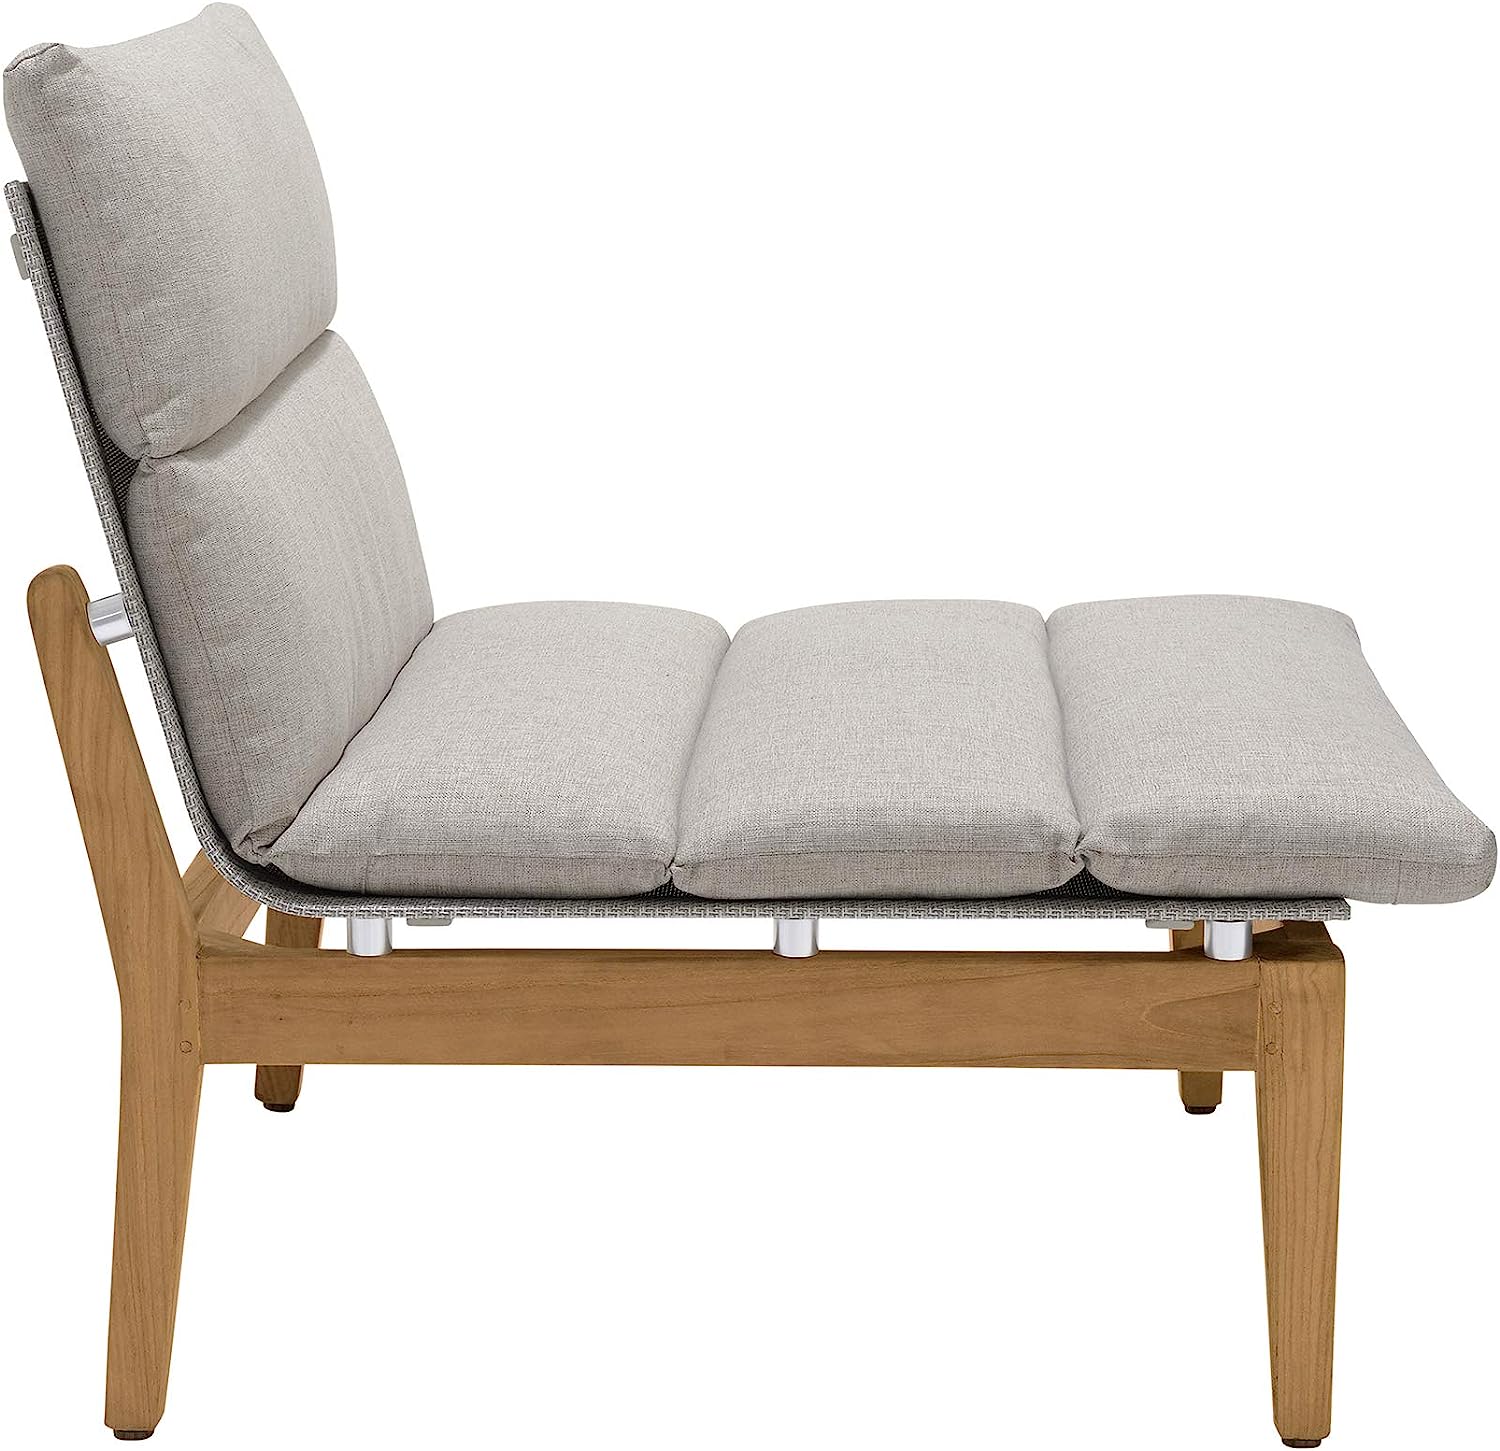 ARMEN LIVING SETODARLT2A1B Arno Outdoor 3 Piece Teak Wood Seating Set, Beige